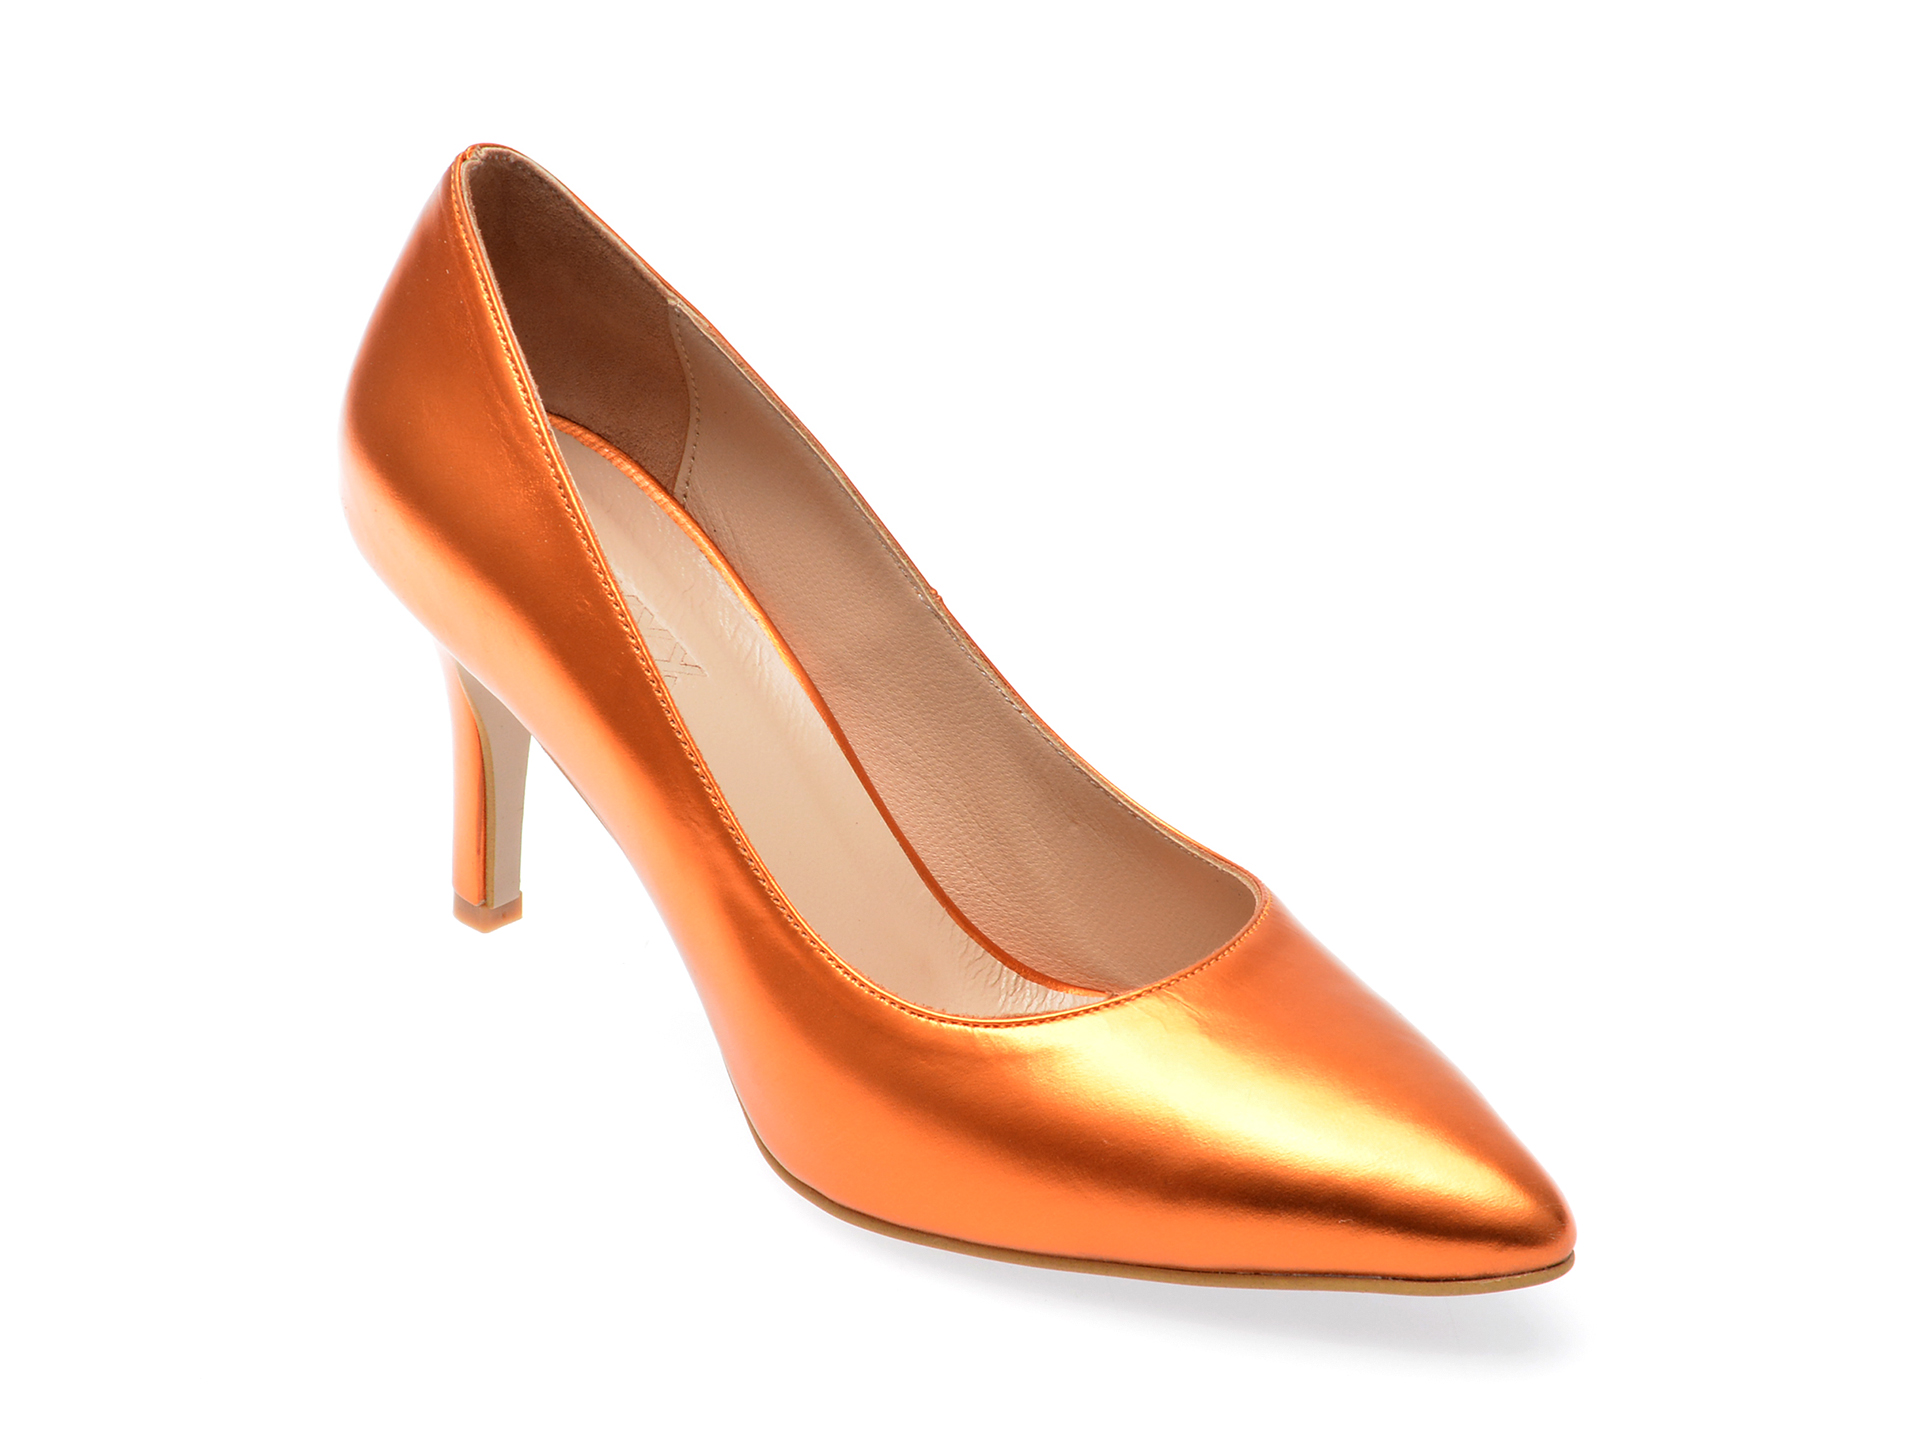 Pantofi GRYXX portocaliu, 113, din piele naturala